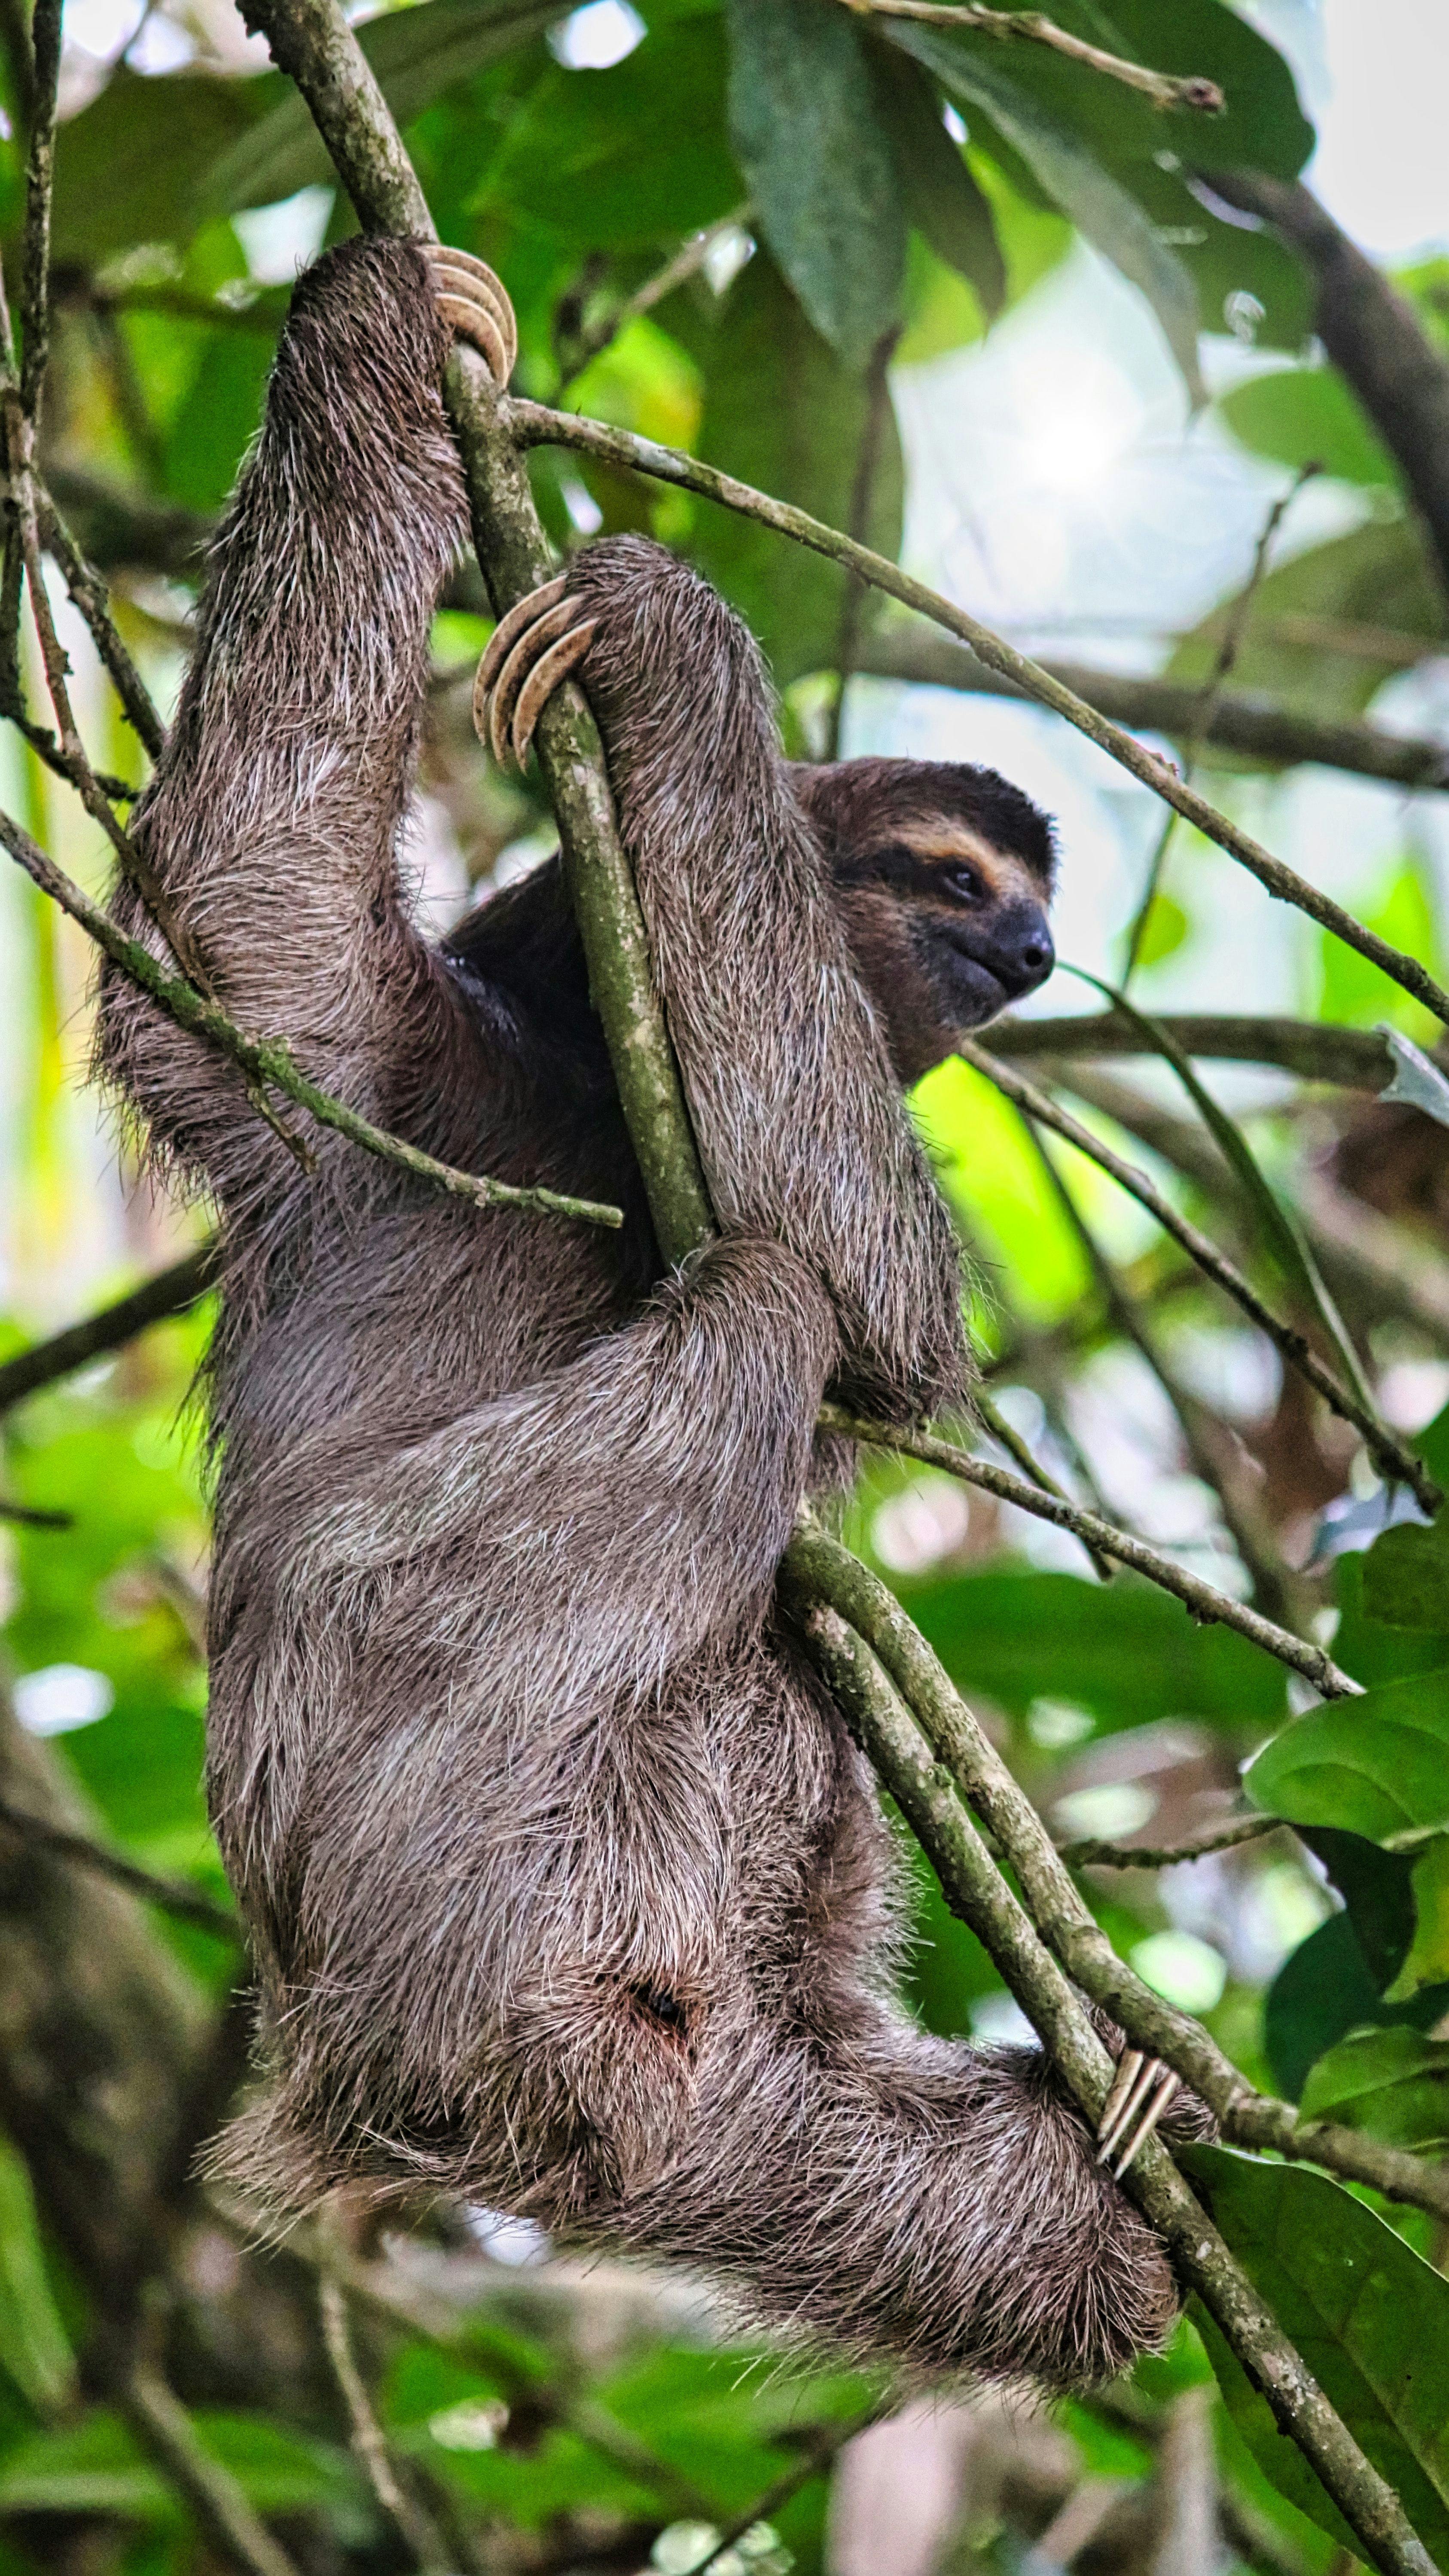 Sloth climbing a tree in Costa Rica rainforest.